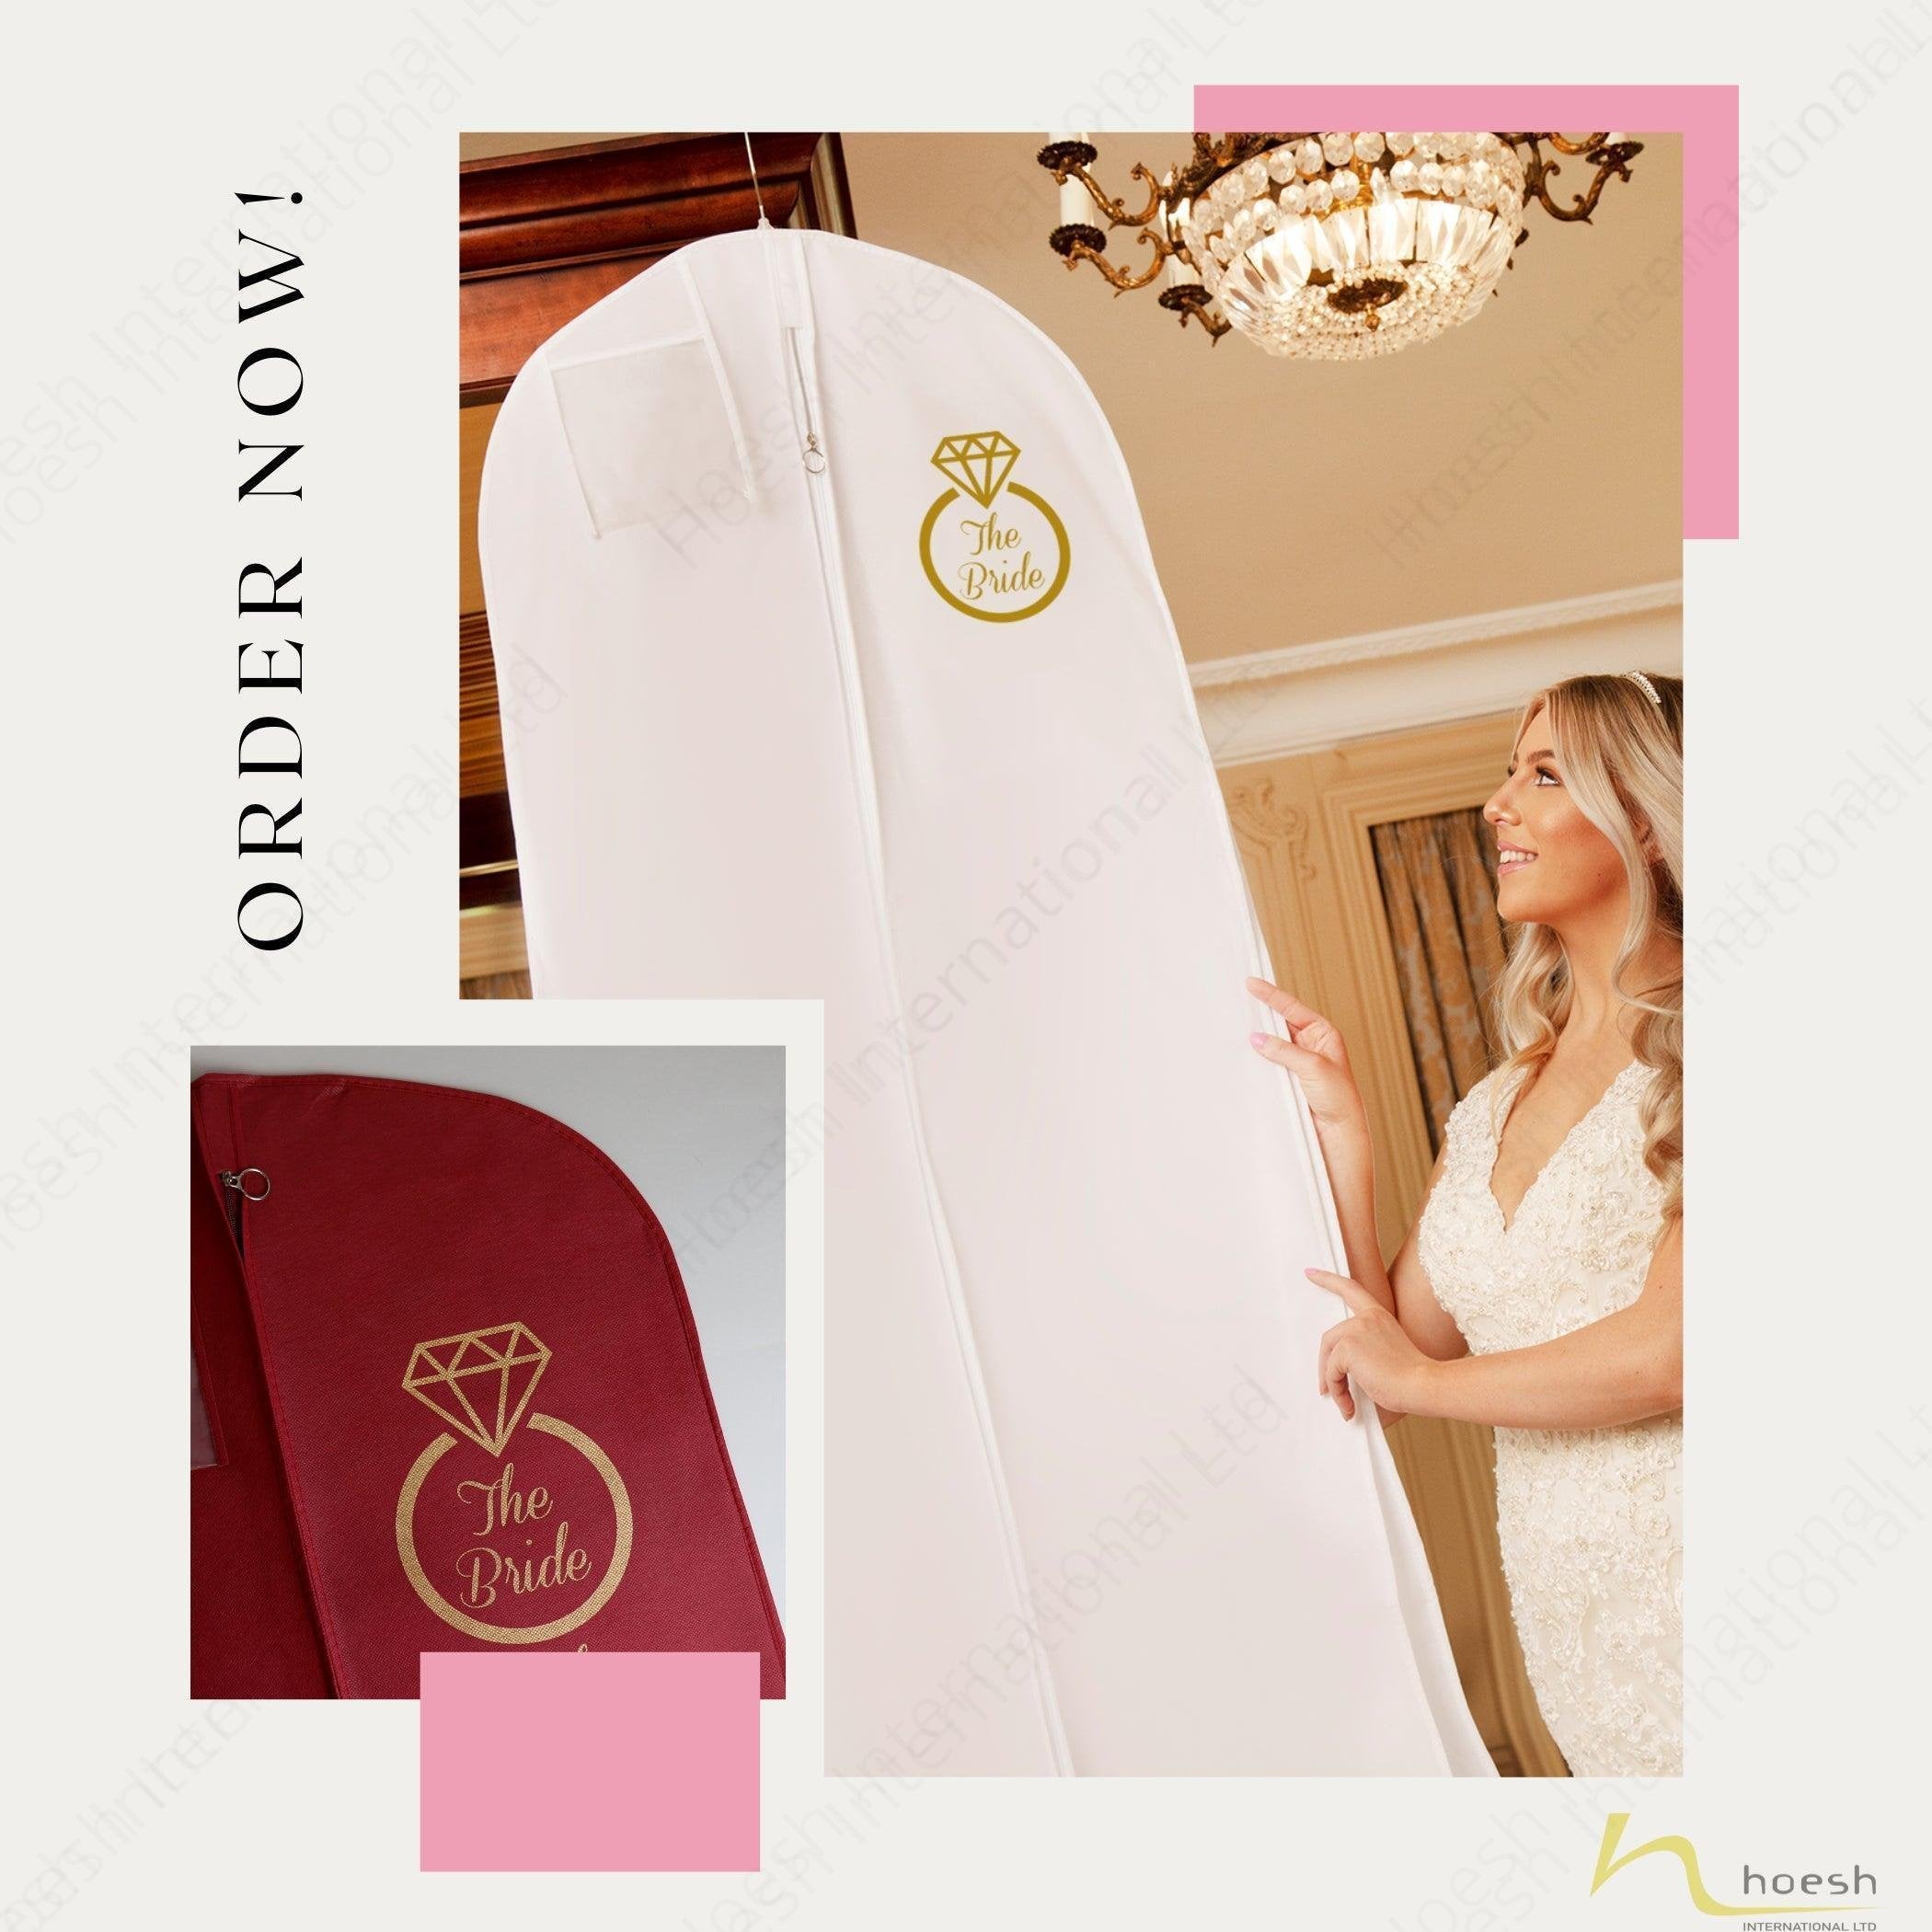 Personalised Breathable Wedding Garment Bag with The Bride - Hoesh International Ltd